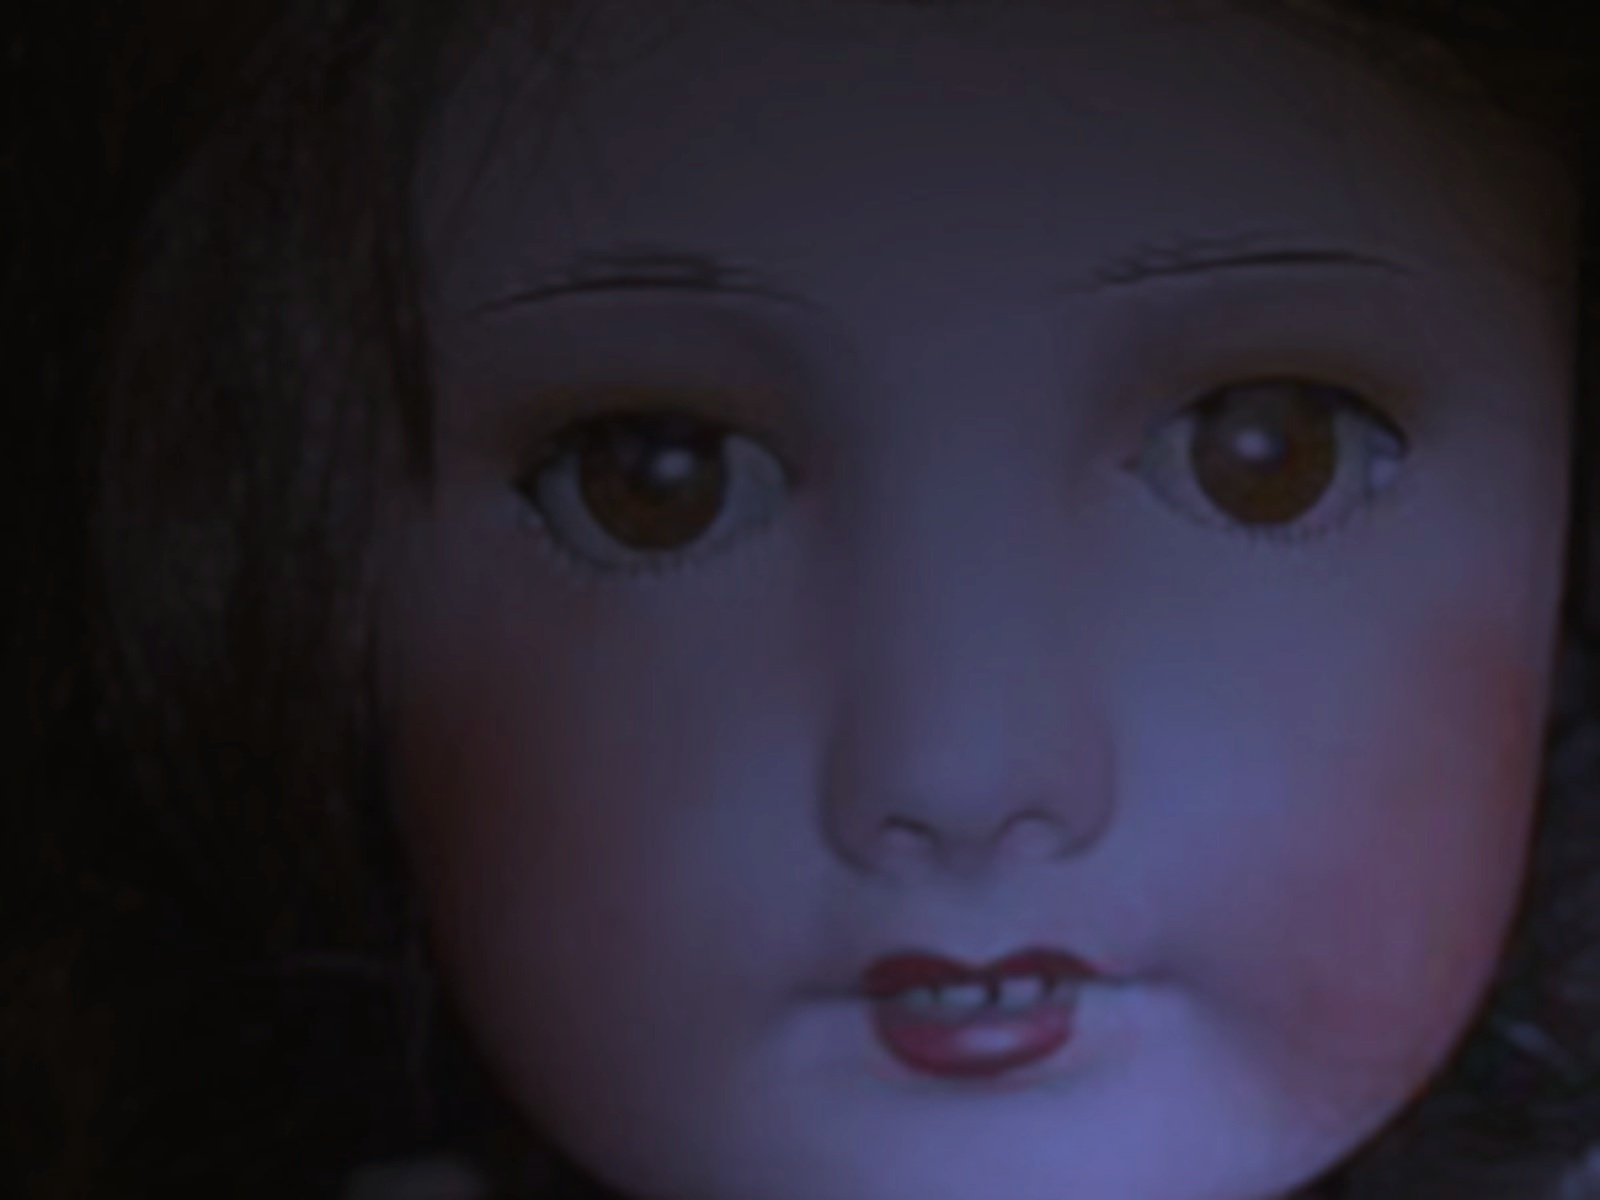 Amanda the Haunted doll